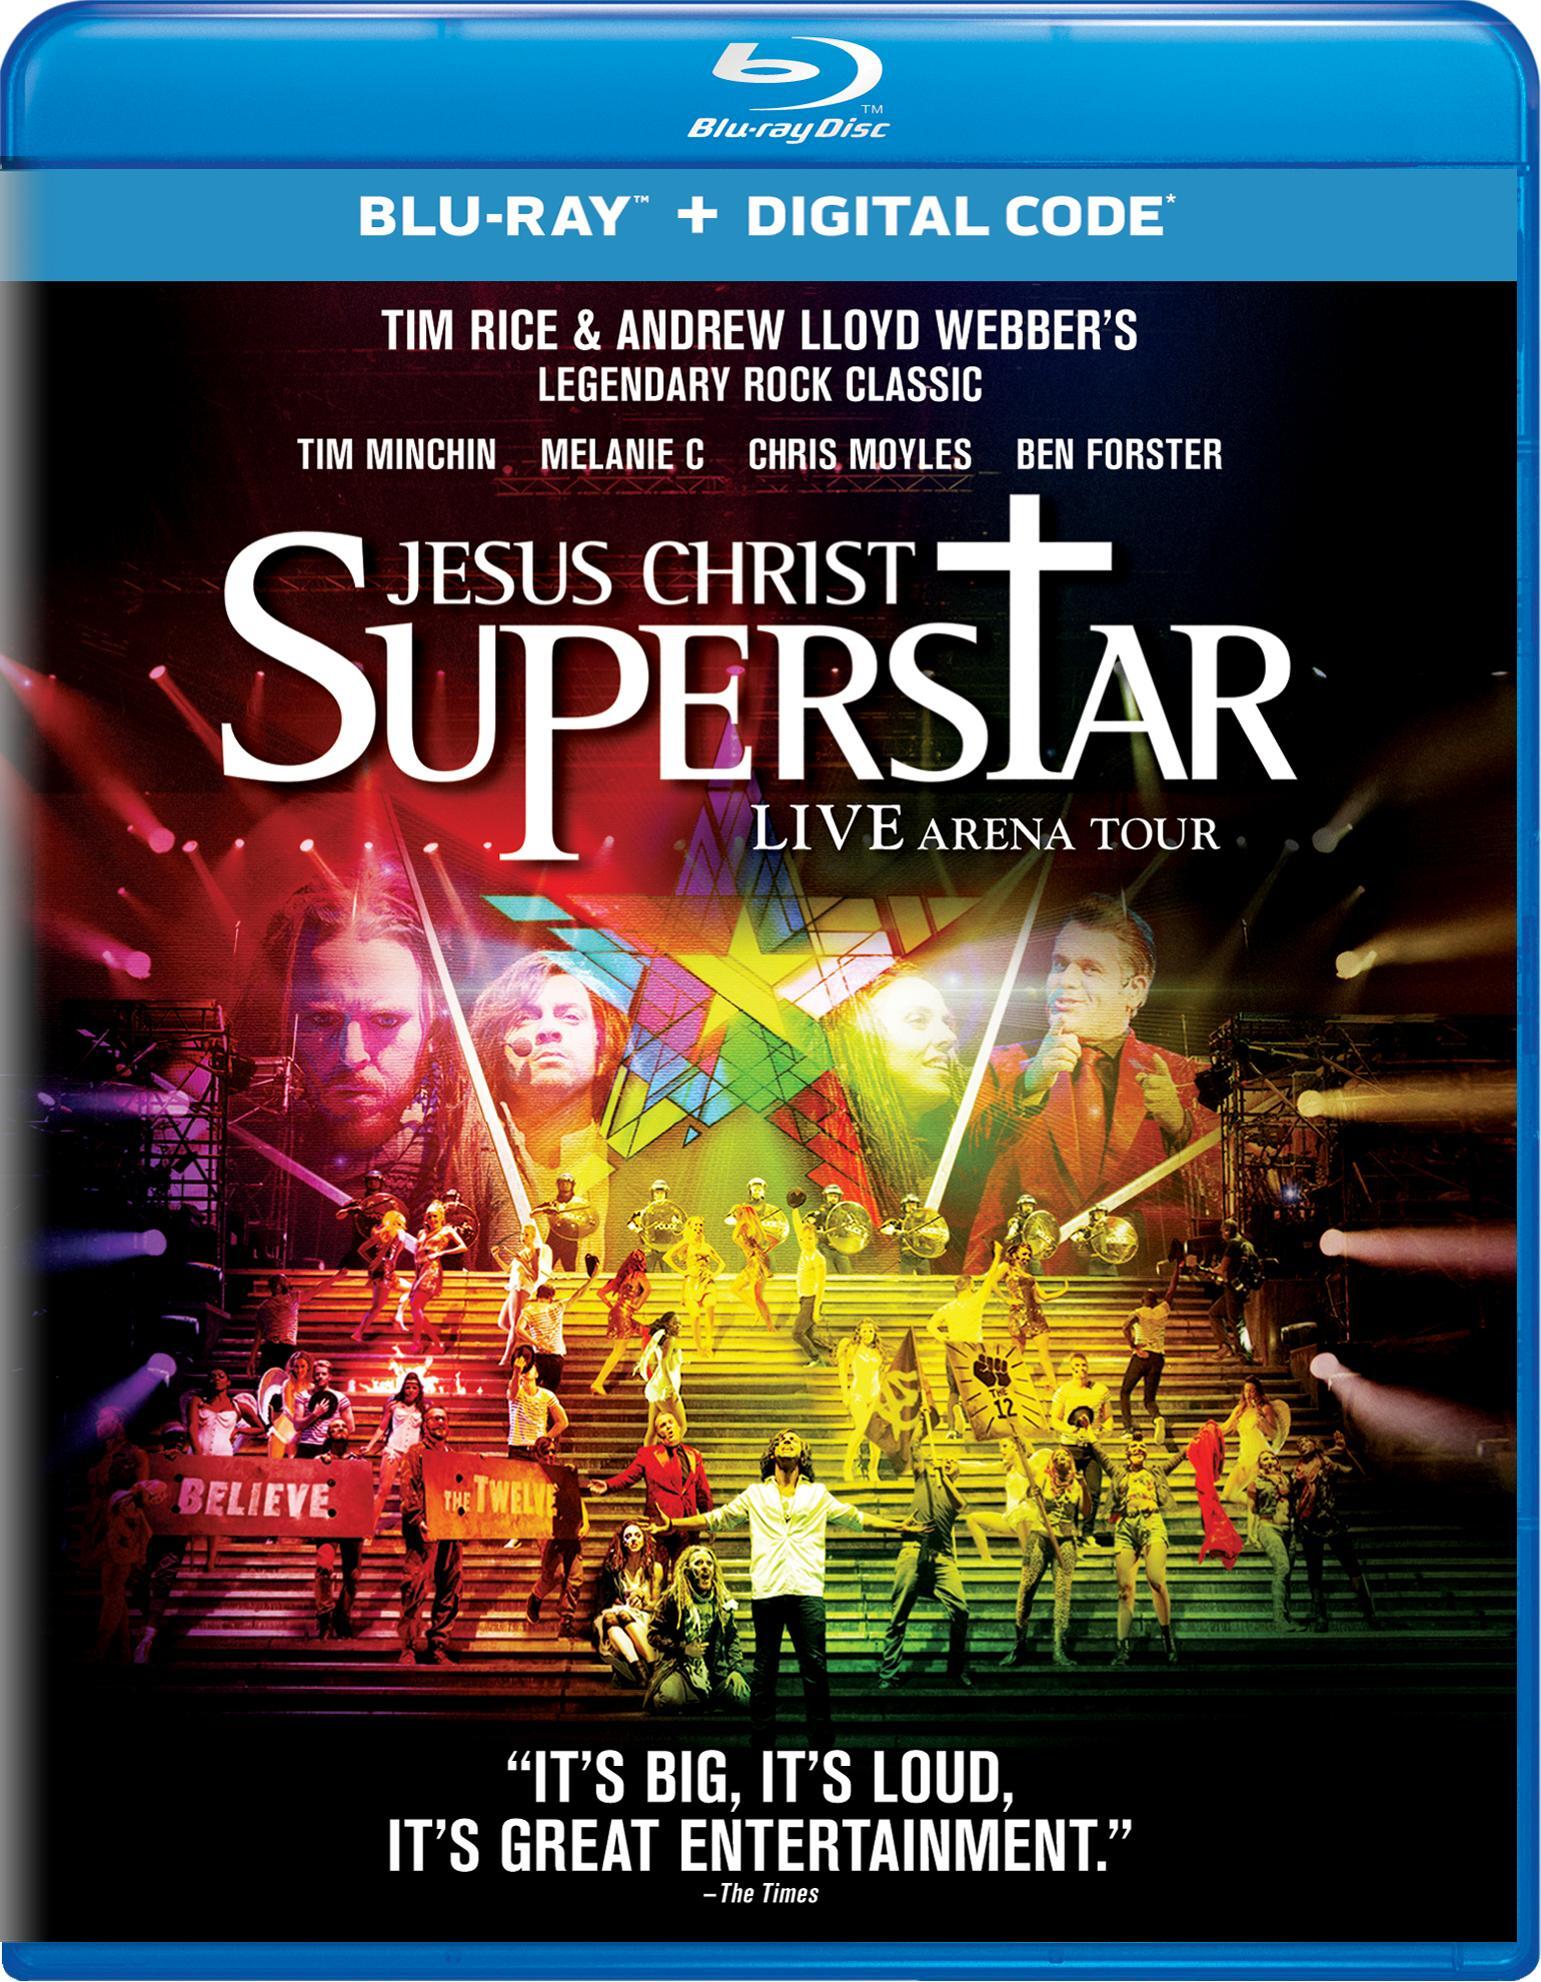 Jesus Christ Superstar - Live Arena Tour 2012 (Blu-ray + Digital Copy) - Blu-ray [ 2012 ]  - Stage Musicals Music On Blu-ray